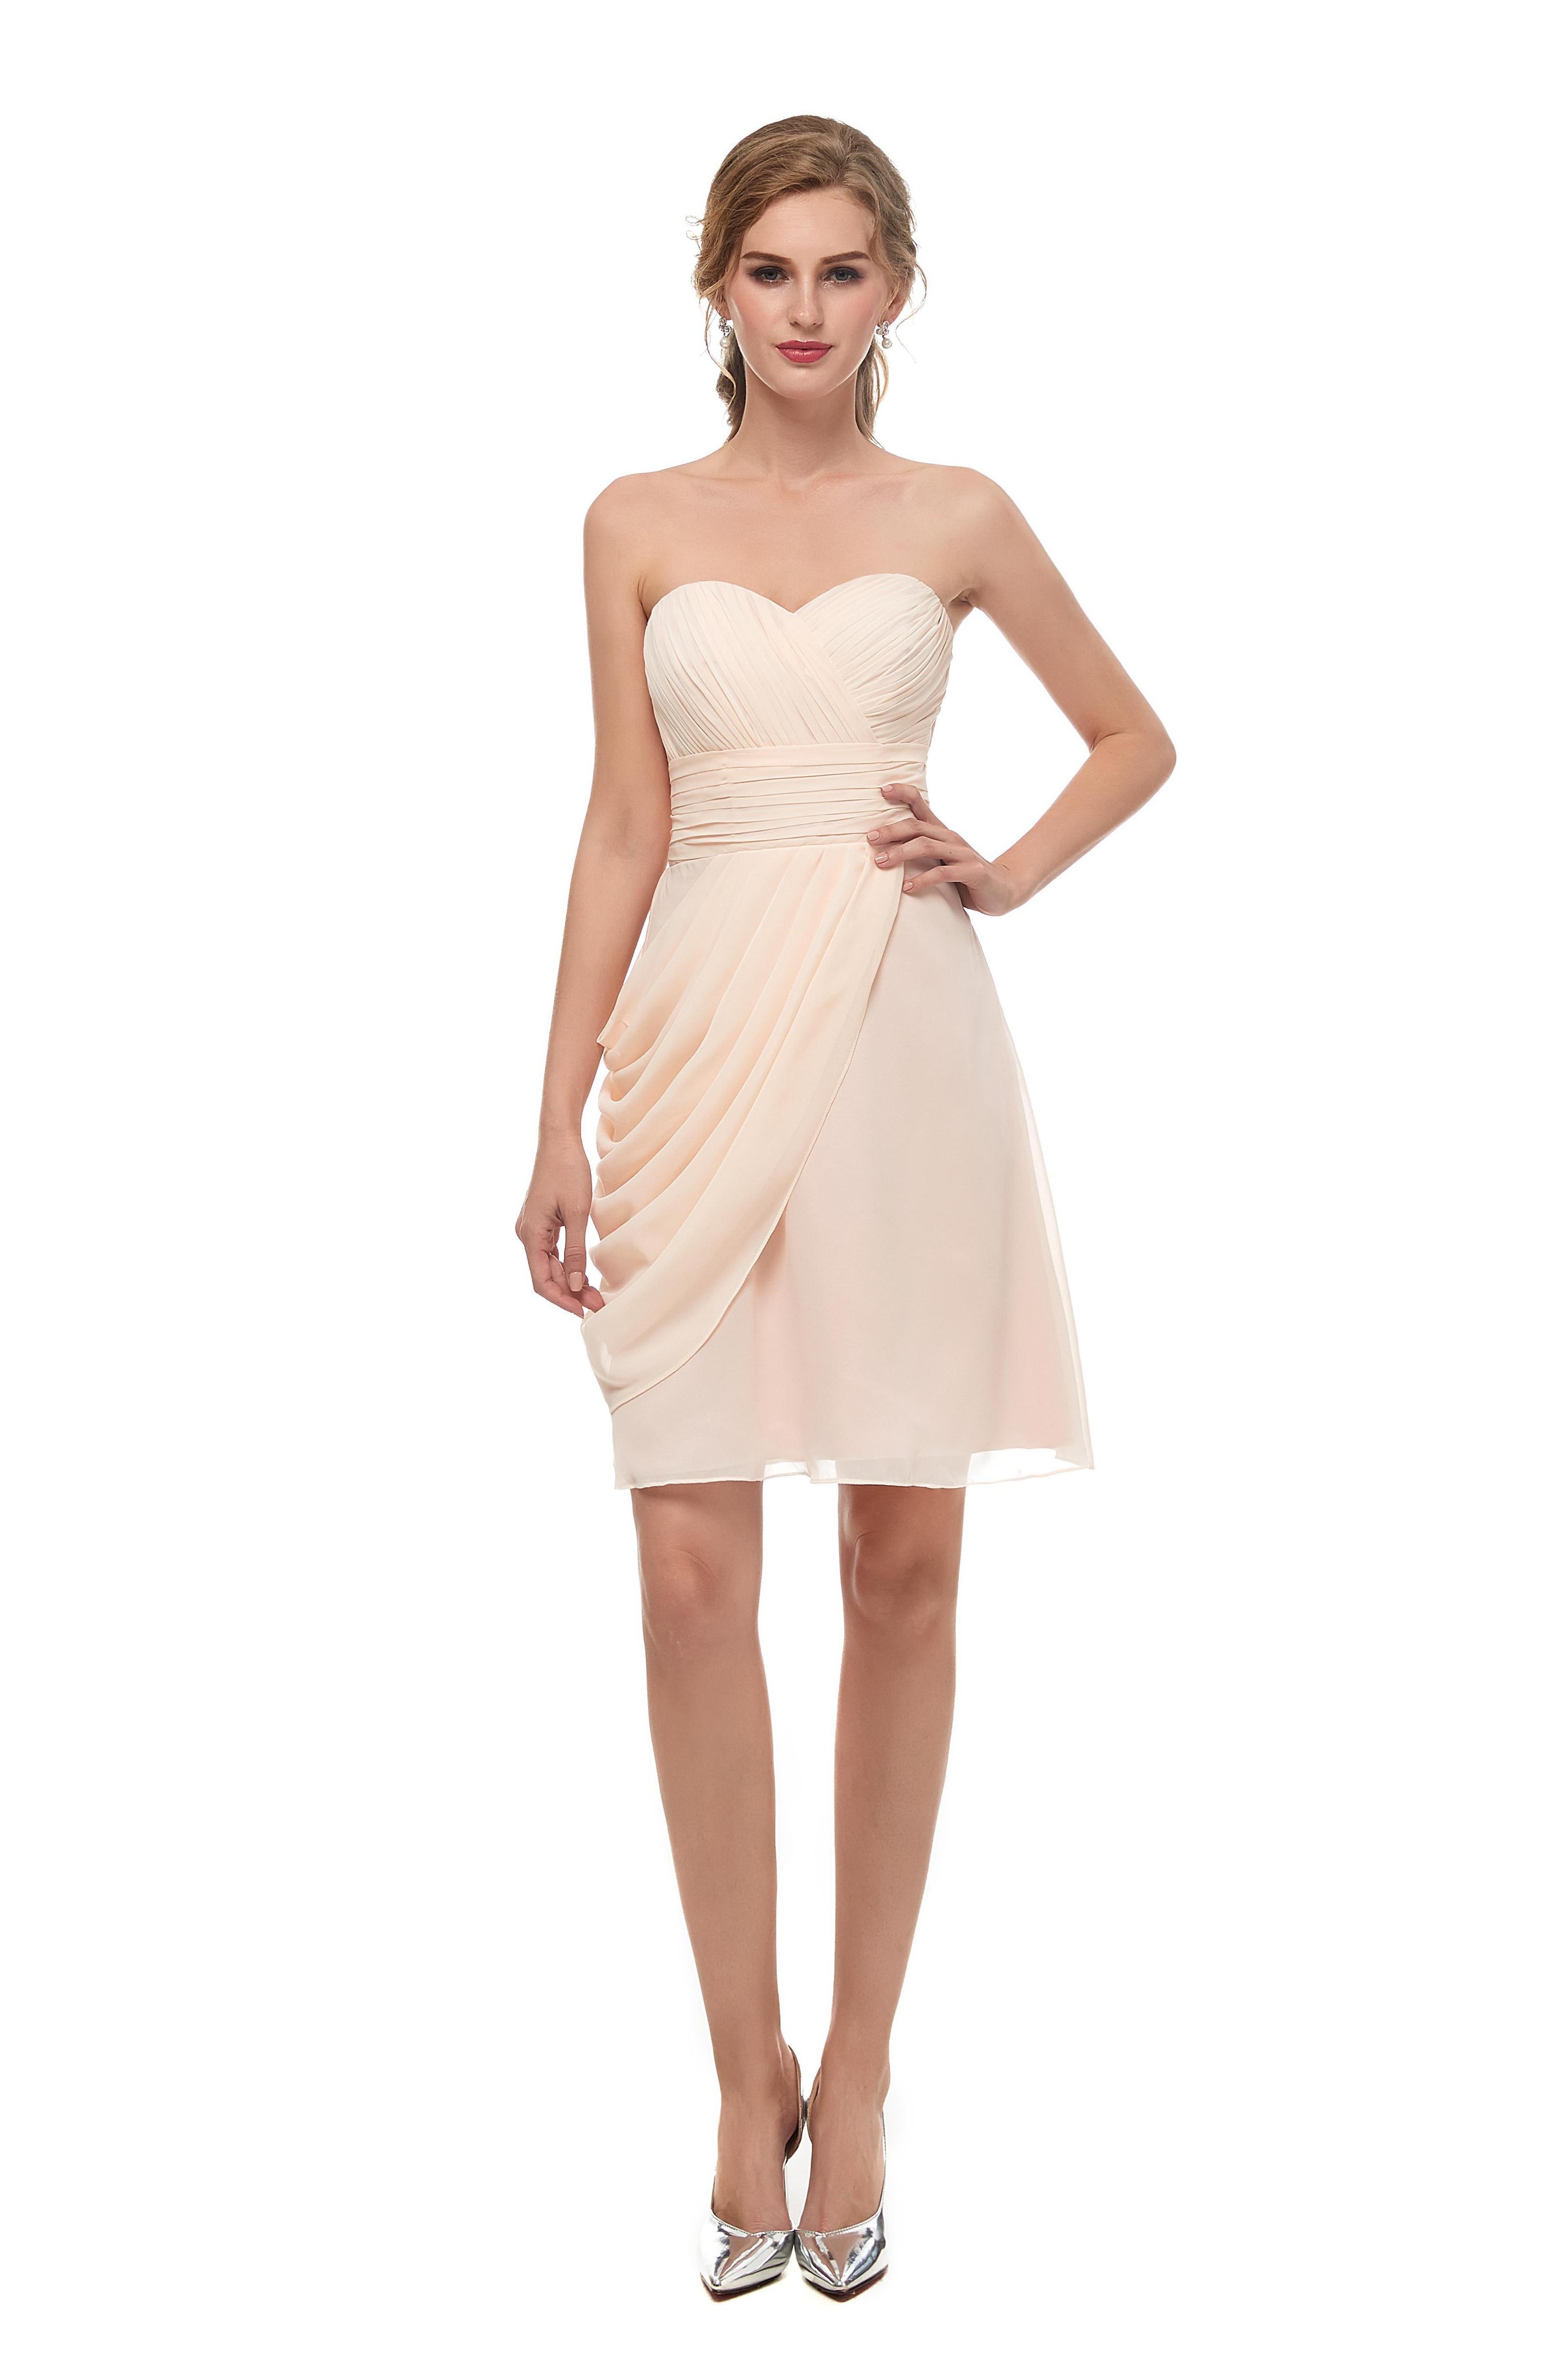 Champagne Chiffon Sleeveless Sweetheart Prom Dress Short Homecoming Dresses AS13669